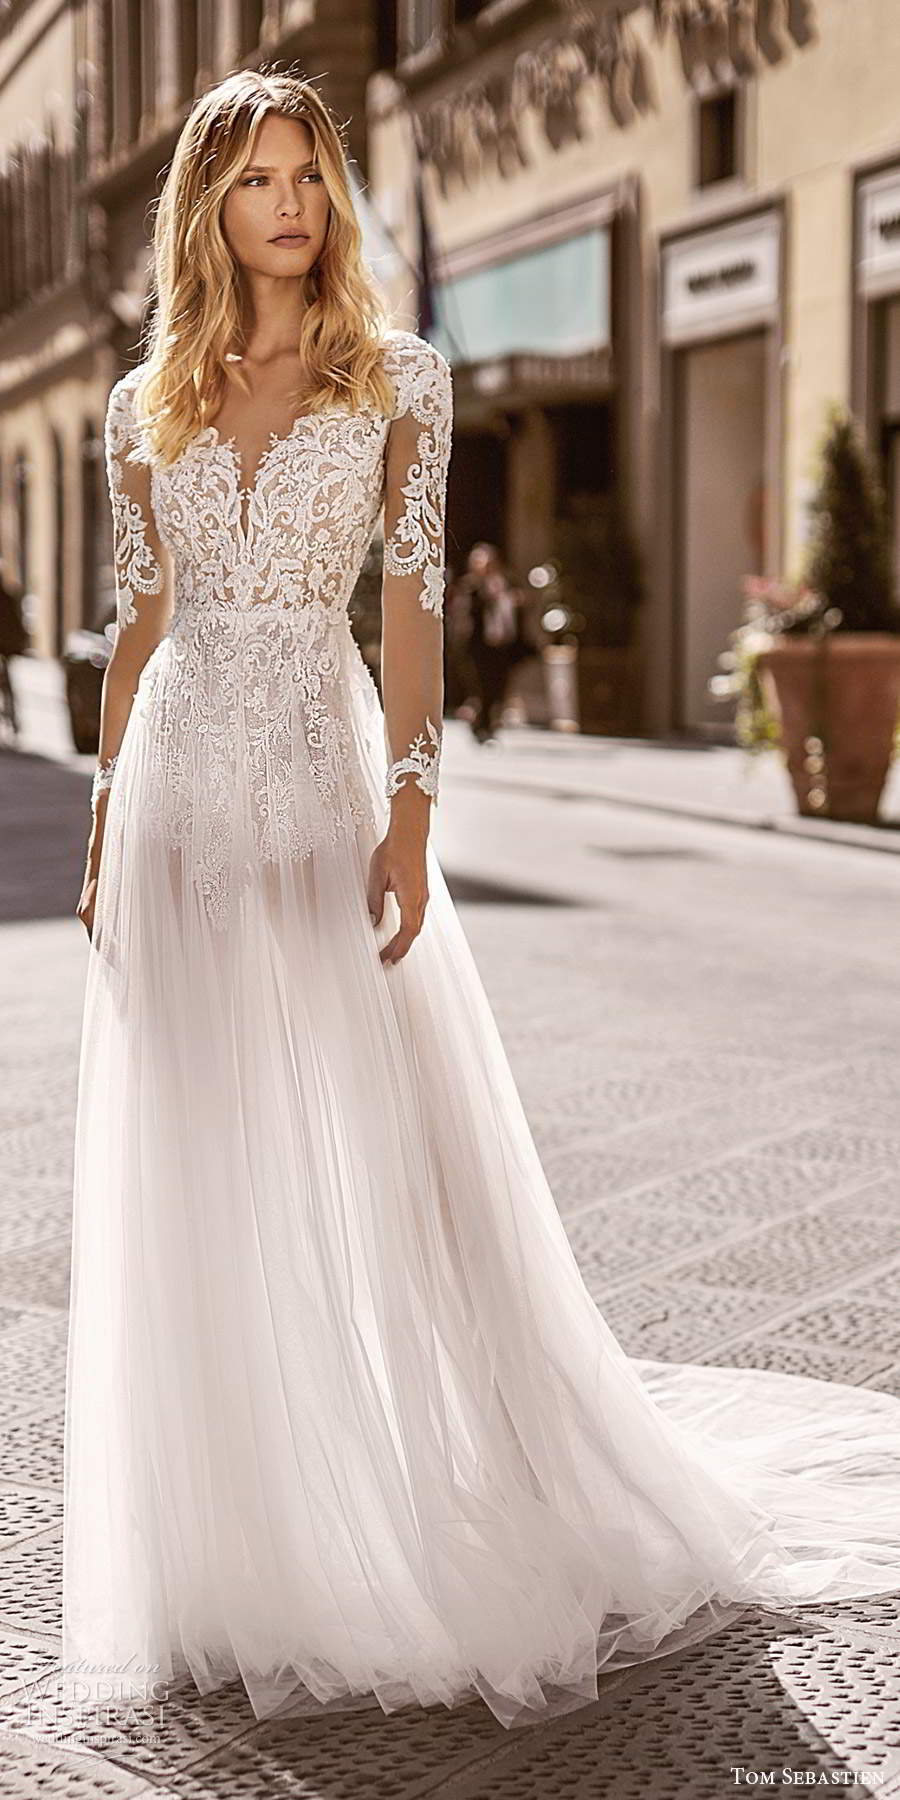 tom sebastien 2020 bridal illusion long sleeves sweetheart neckline heavily embellished bodice a line ball gown wedding dress chapel train (17) mv